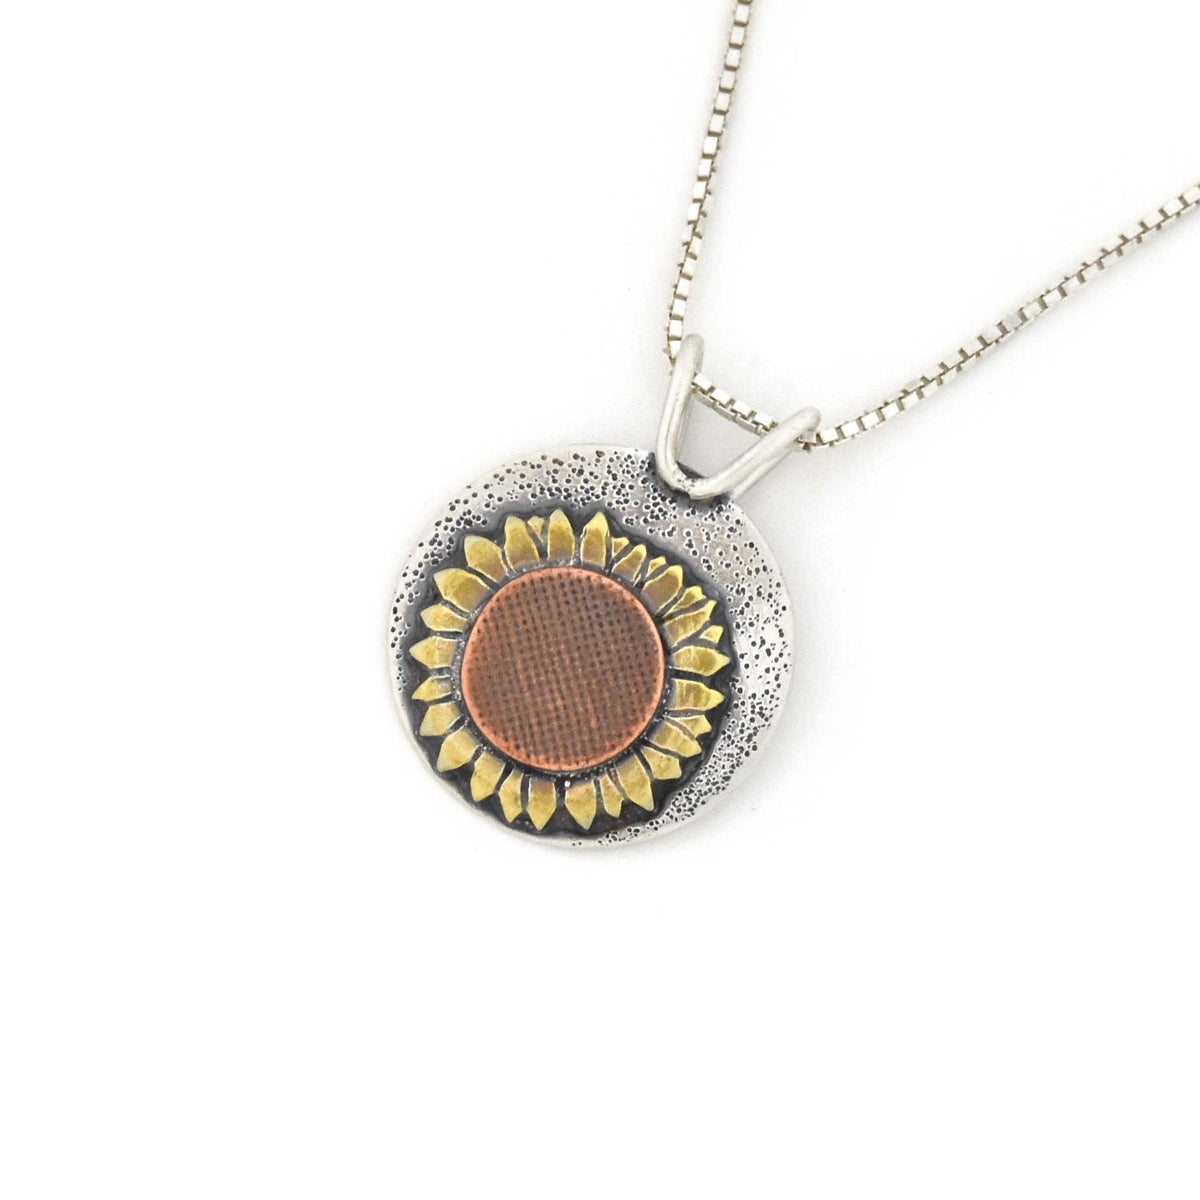 Sunflower Pendant - Mixed Metal Pendant   5640 - handmade by Beth Millner Jewelry